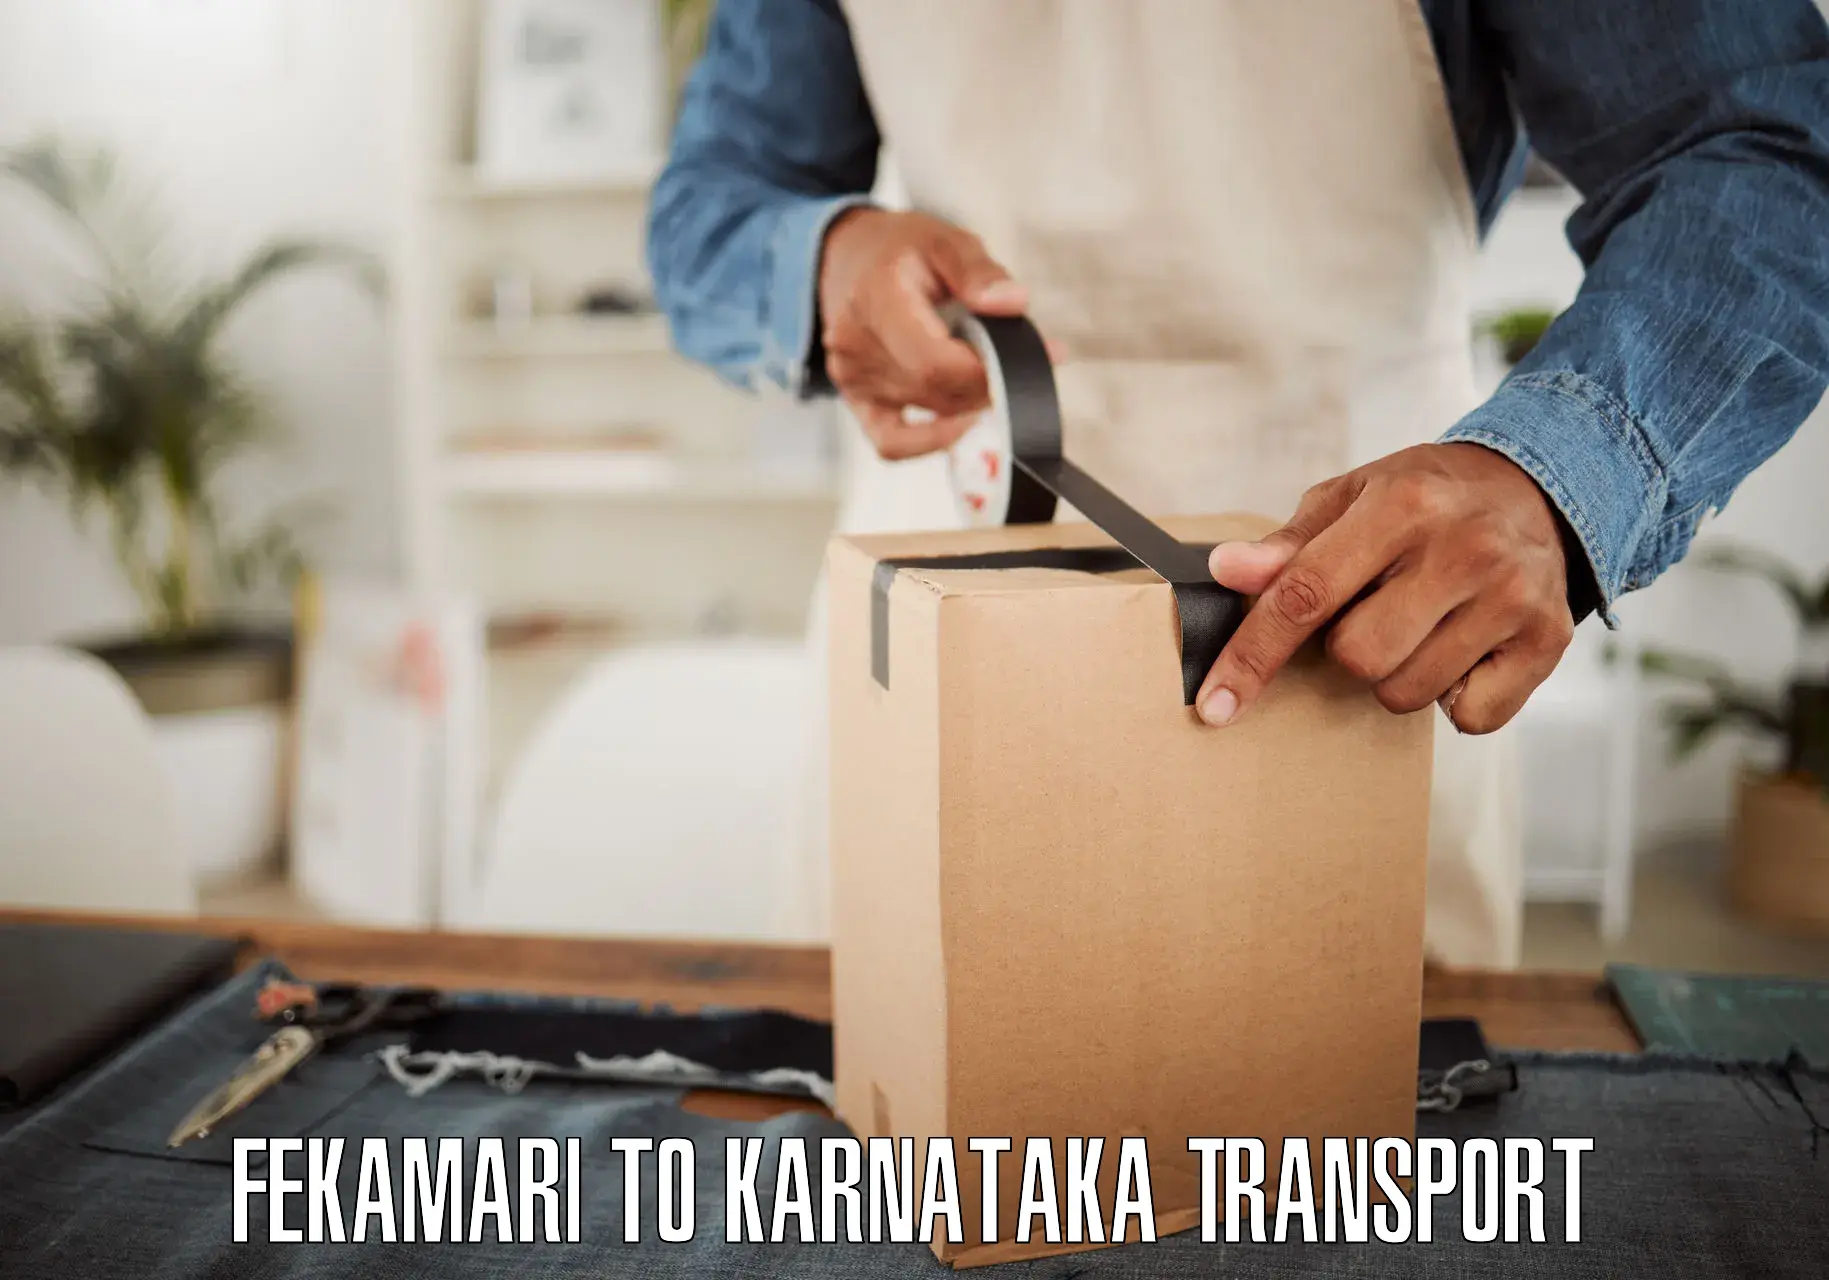 Bike transport service Fekamari to Karnataka